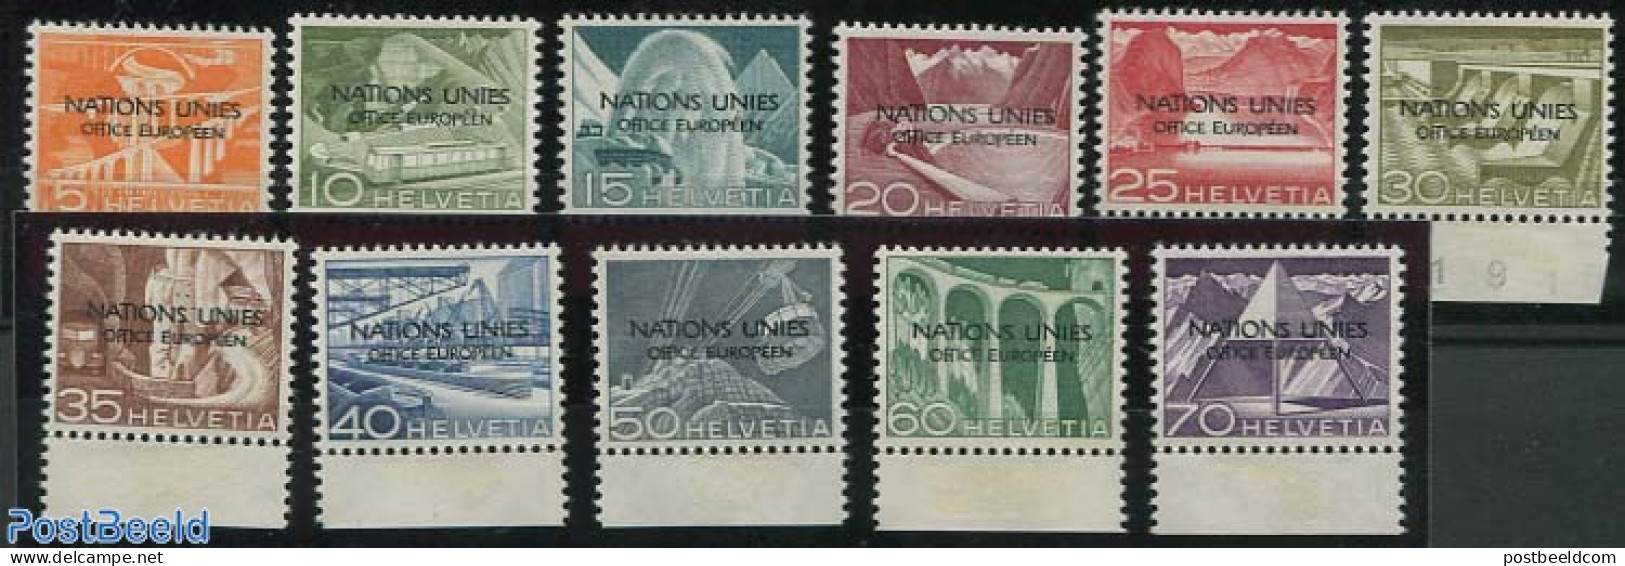 Switzerland 1950 UNO Office 11v, Overprint Variety: OF[ICE, Mint NH, Nature - Transport - Various - Water, Dams & Fall.. - Ongebruikt